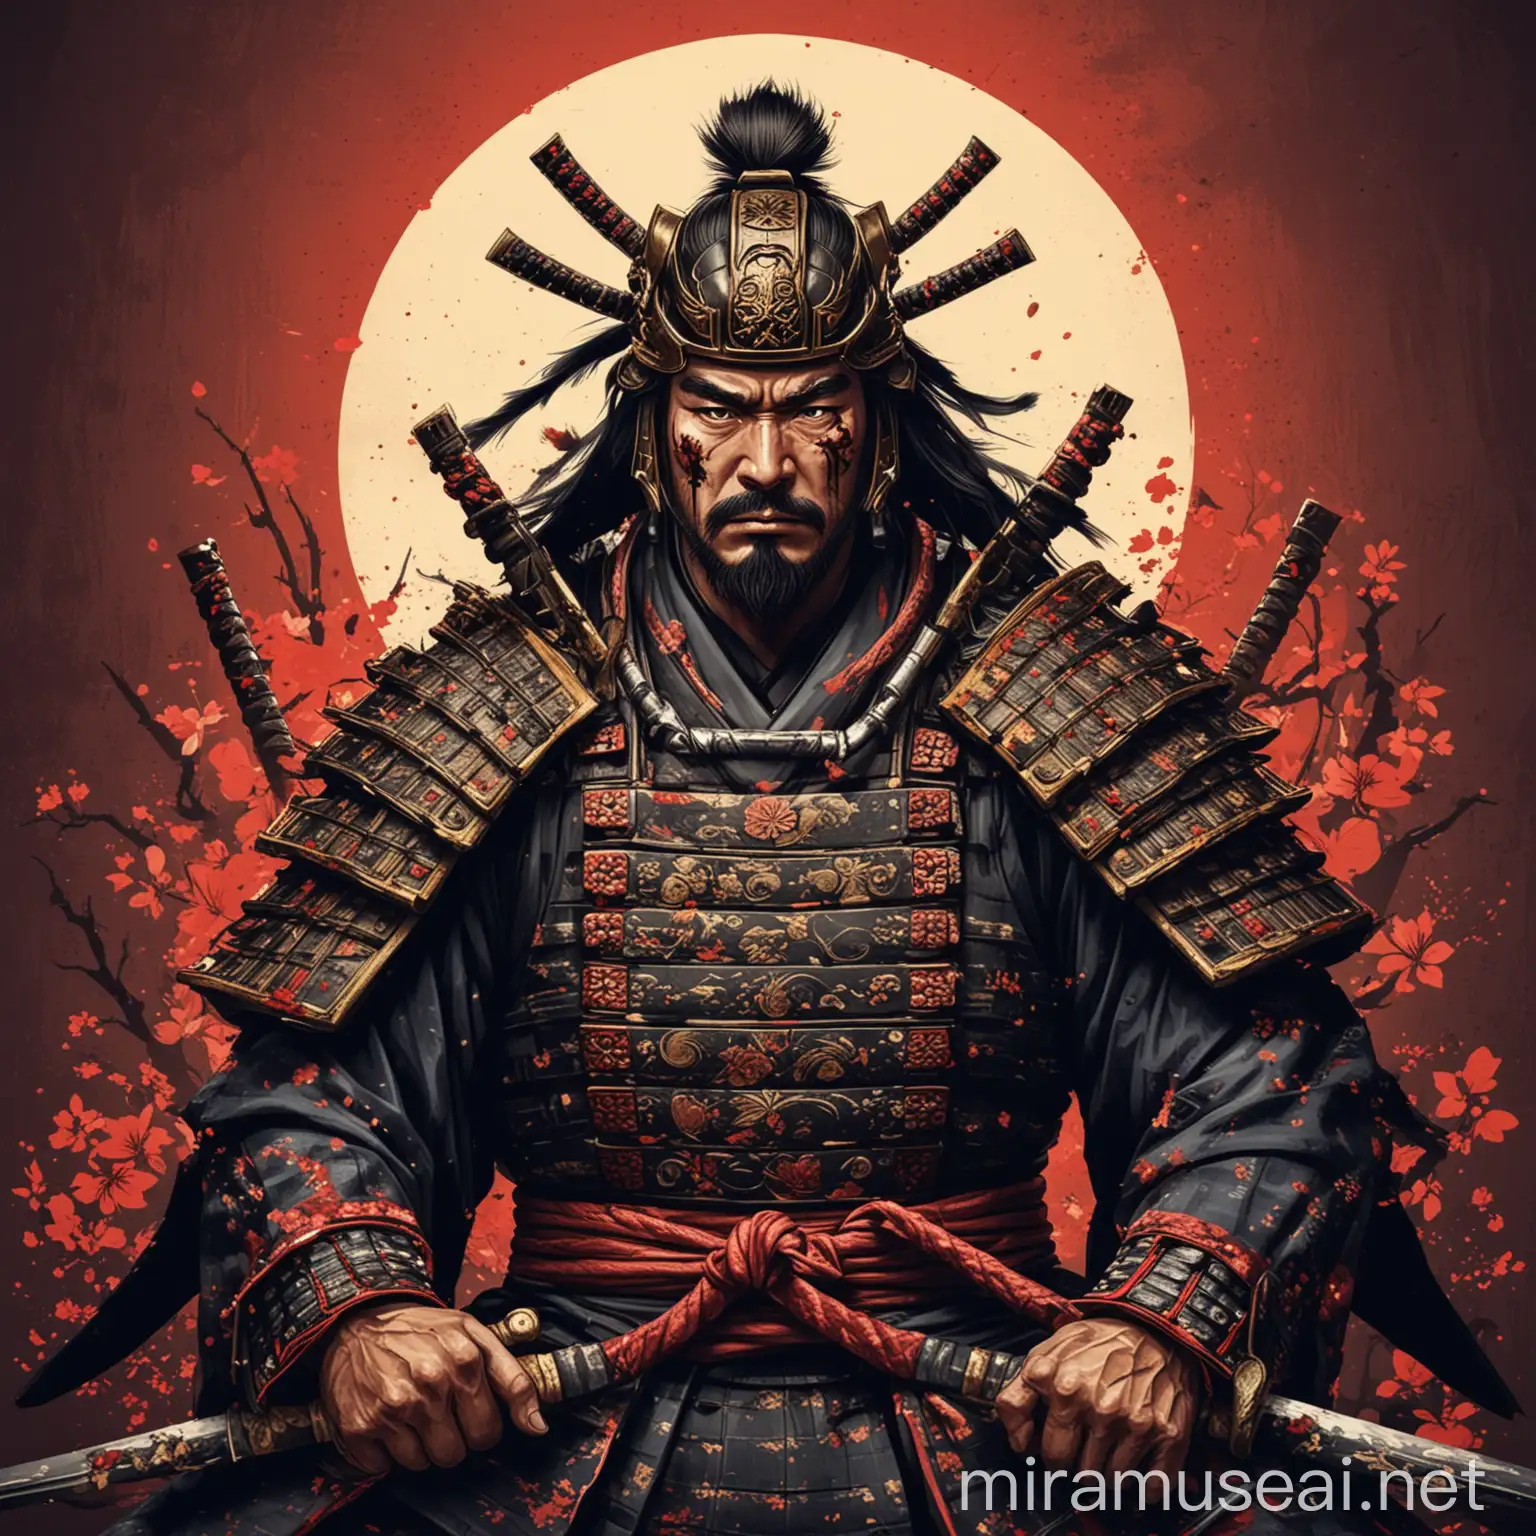 Shogun Samurai Warrior in Traditional Armor and Katana Sword